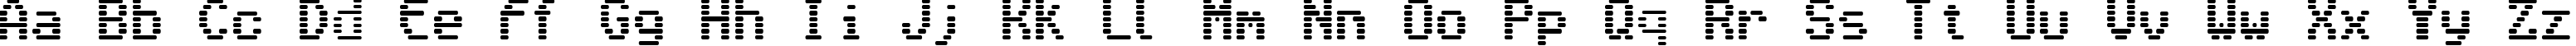 Пример написания английского алфавита шрифтом VenetiaMonitor